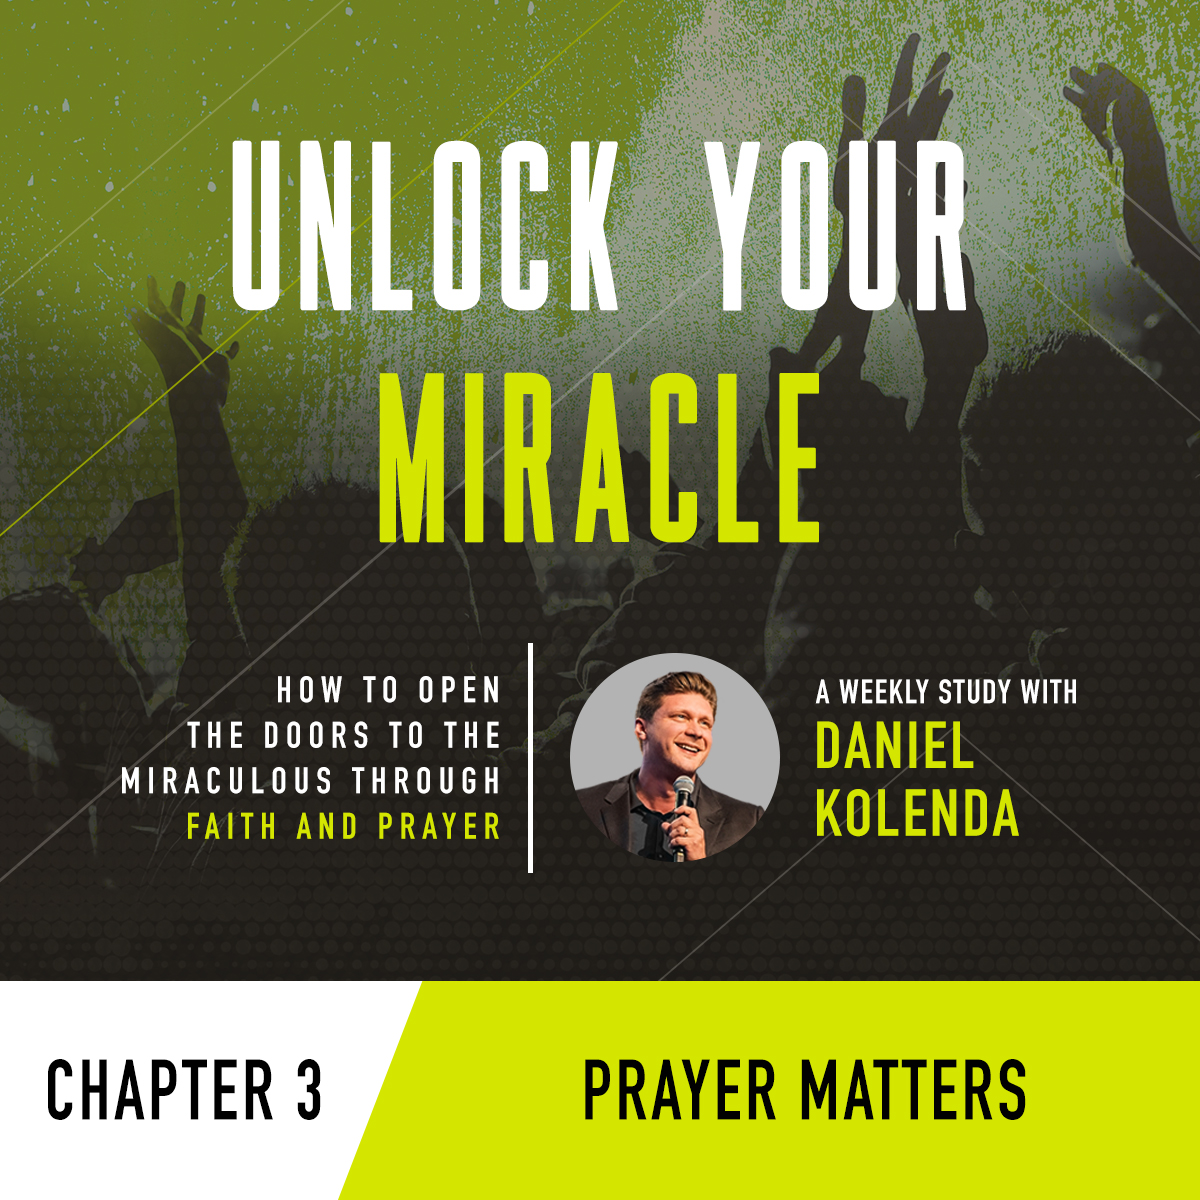 Unlocking the Miraculous